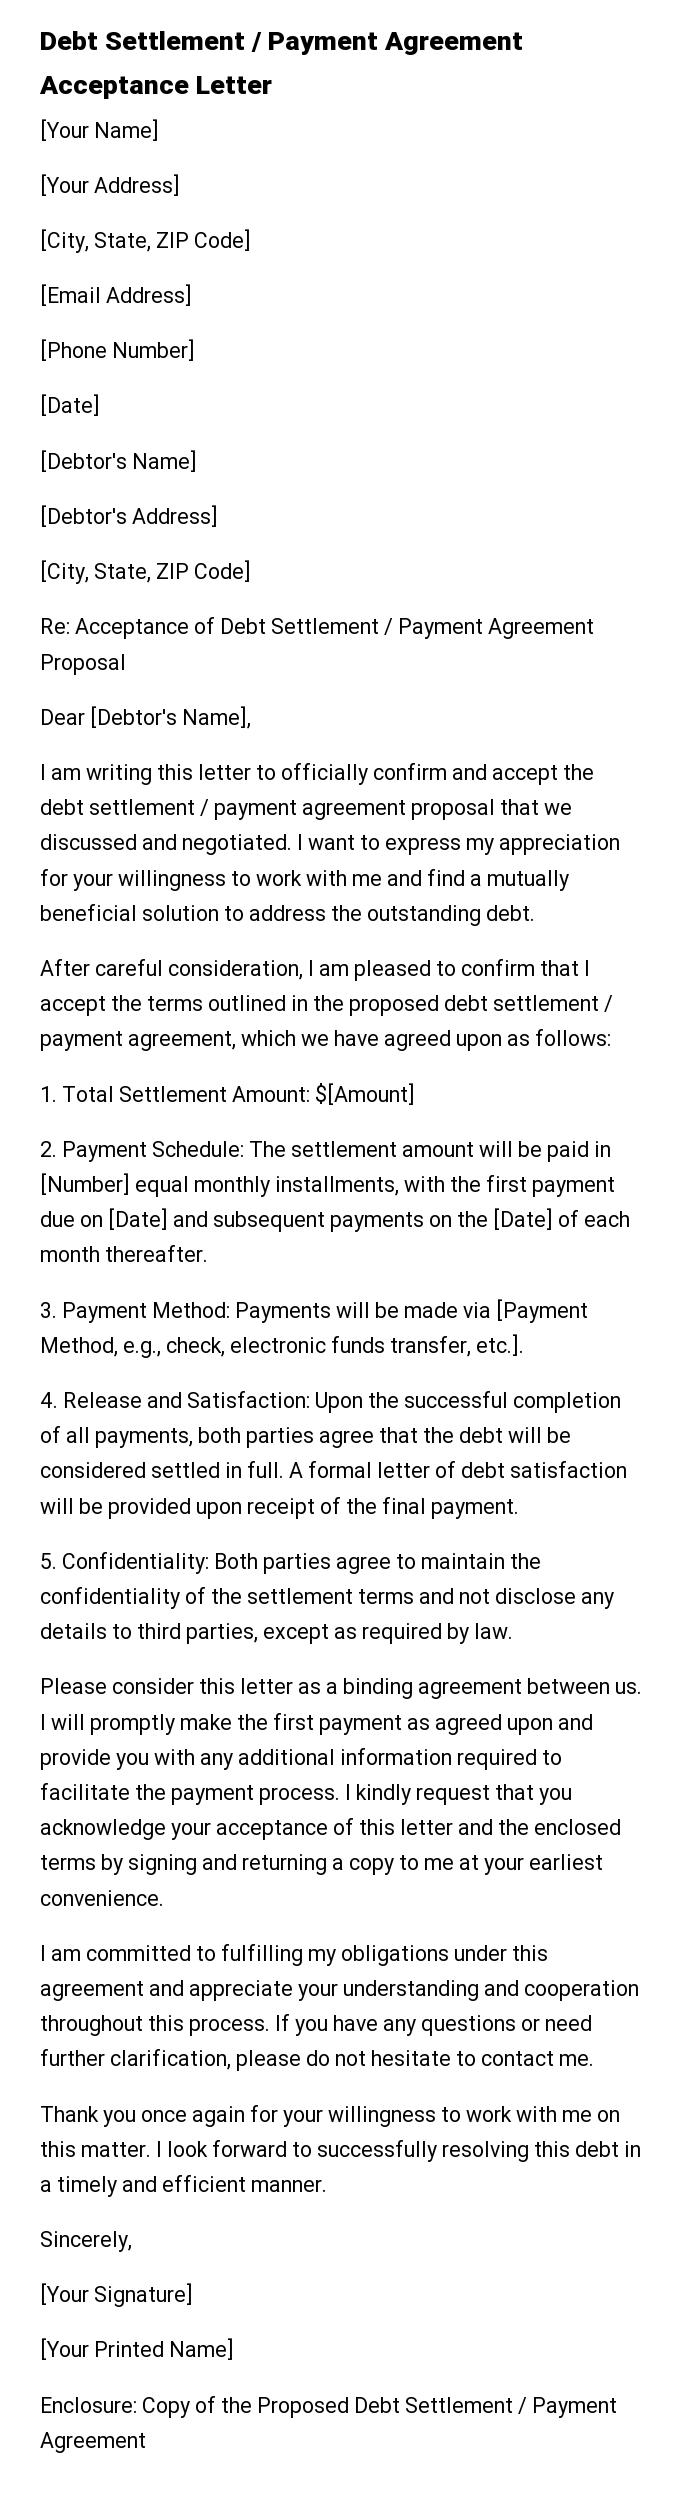 Debt Settlement / Payment Agreement Acceptance Letter